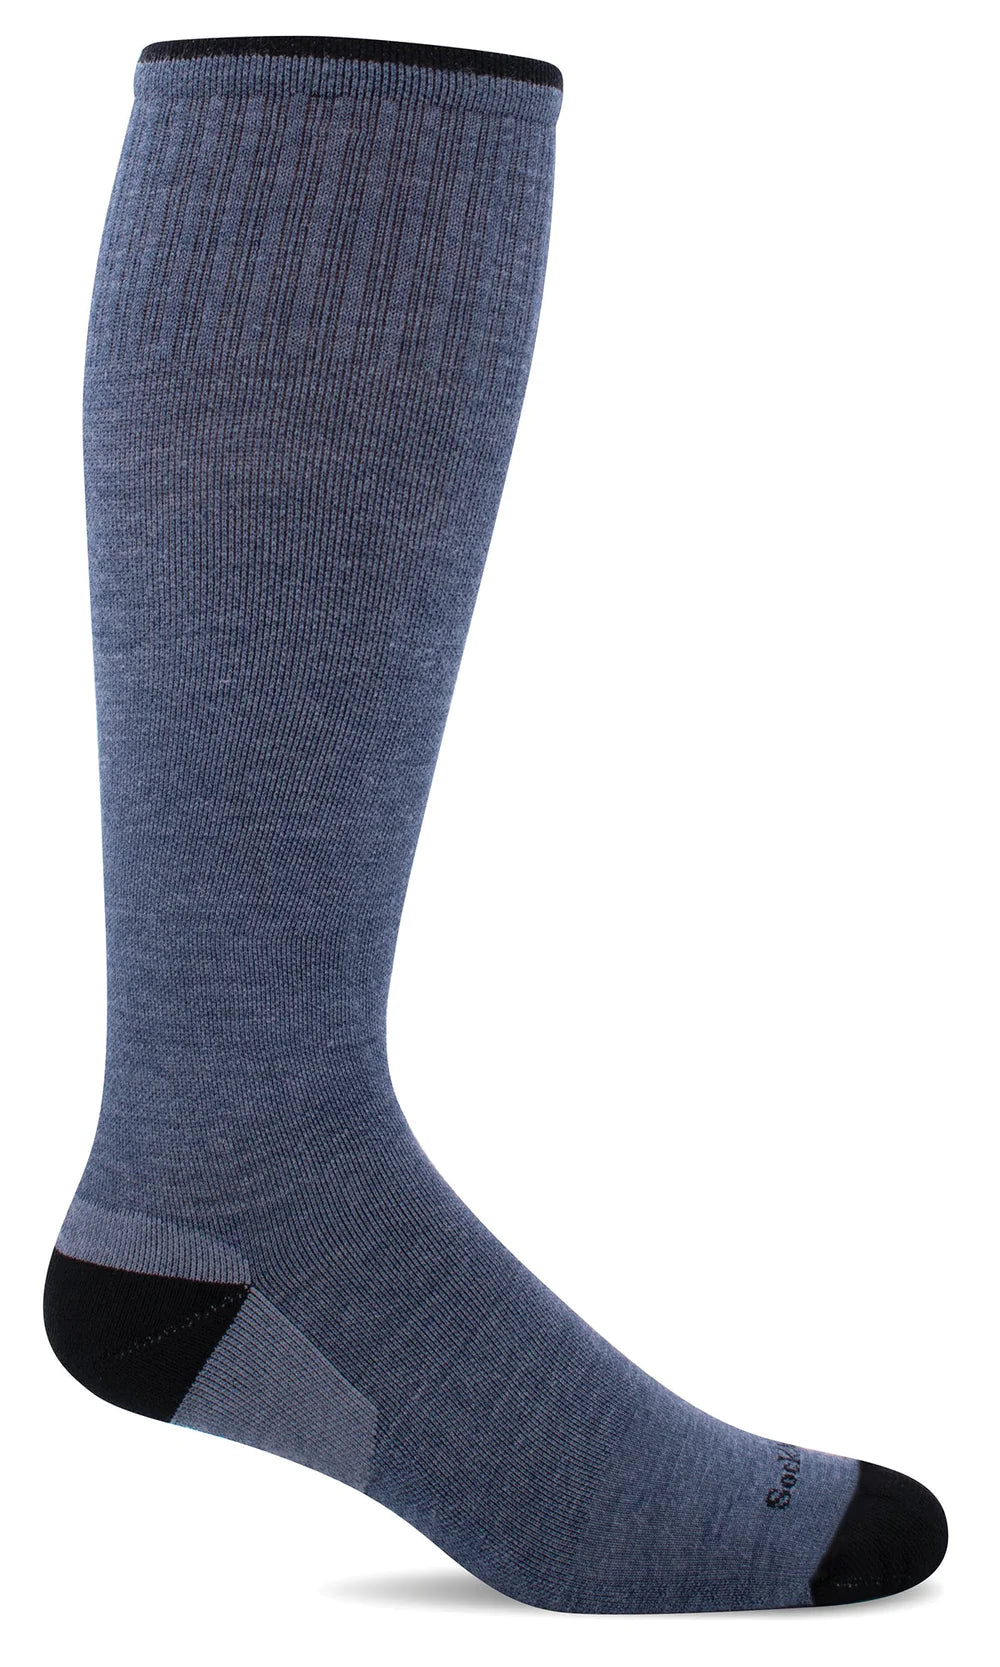 Elevation Men's Bamboo/Merino Firm Compression Socks in Denim - Size L/XL